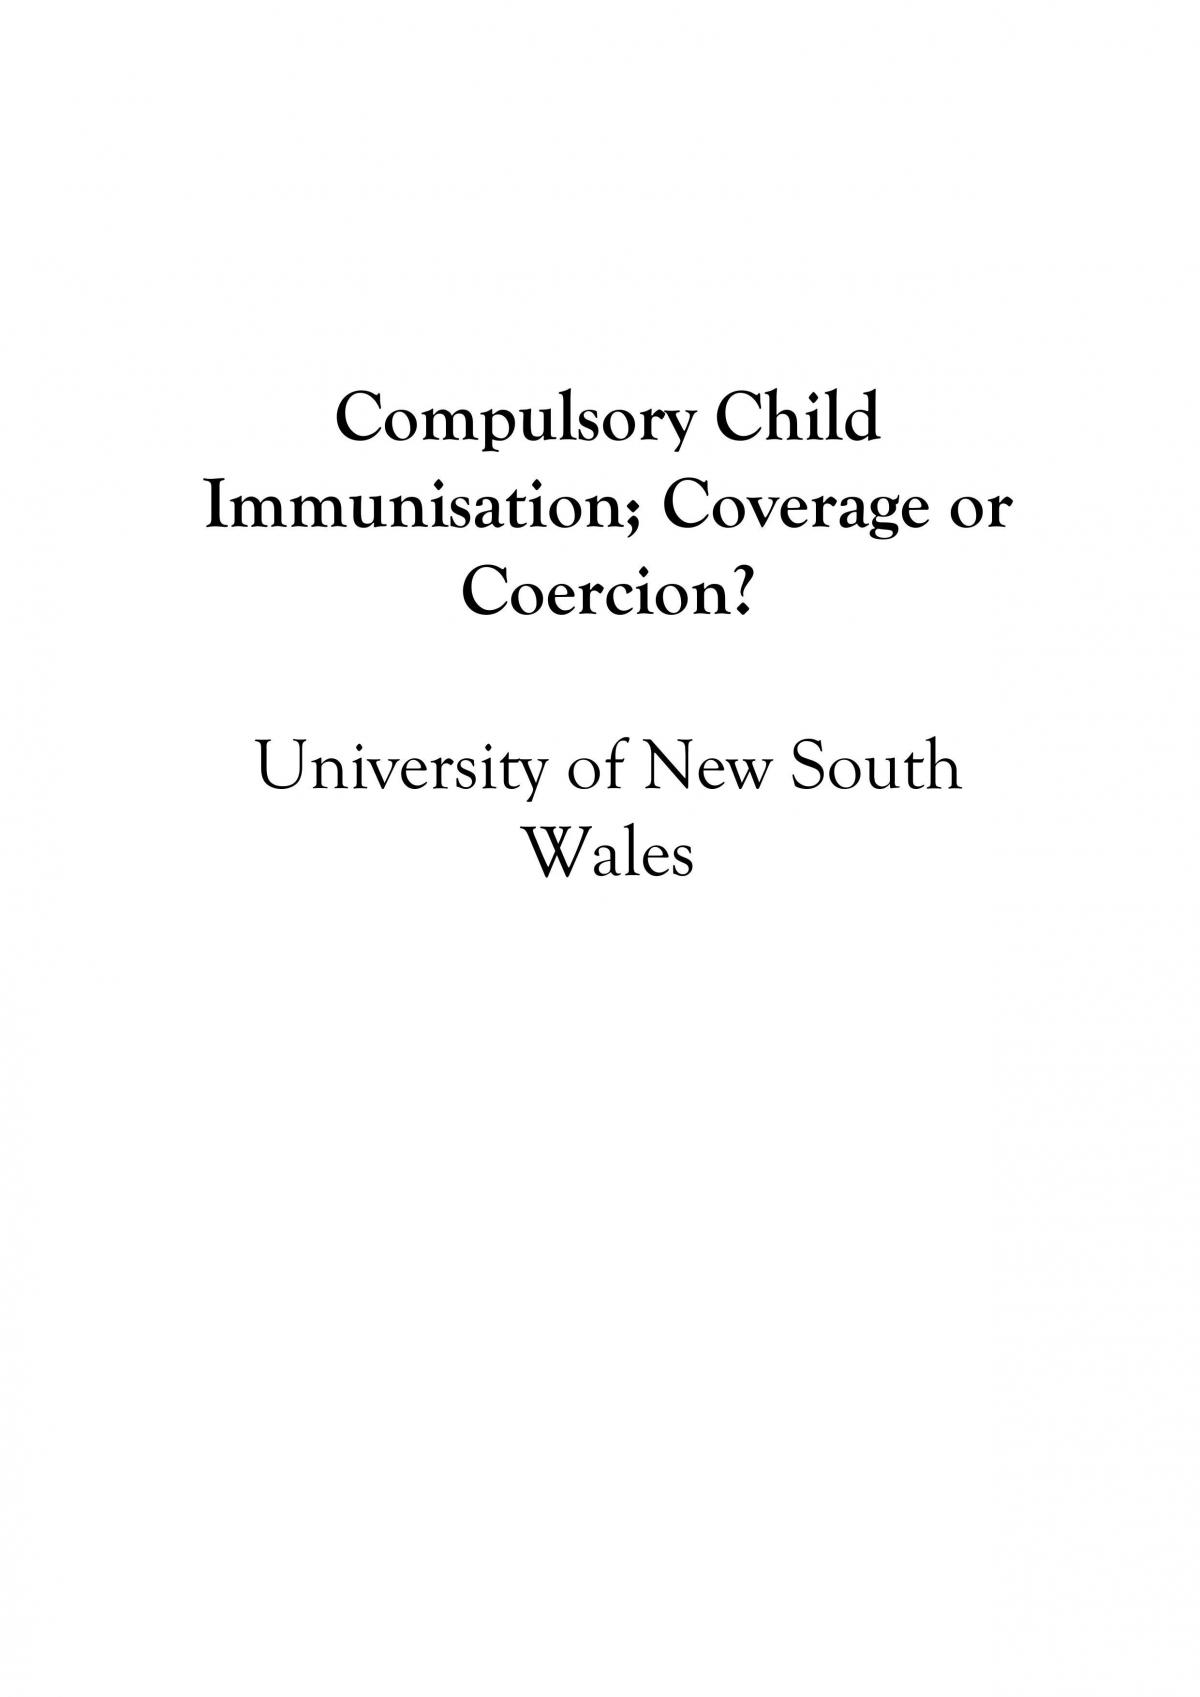 Compulsory Child Immunisation - Page 1